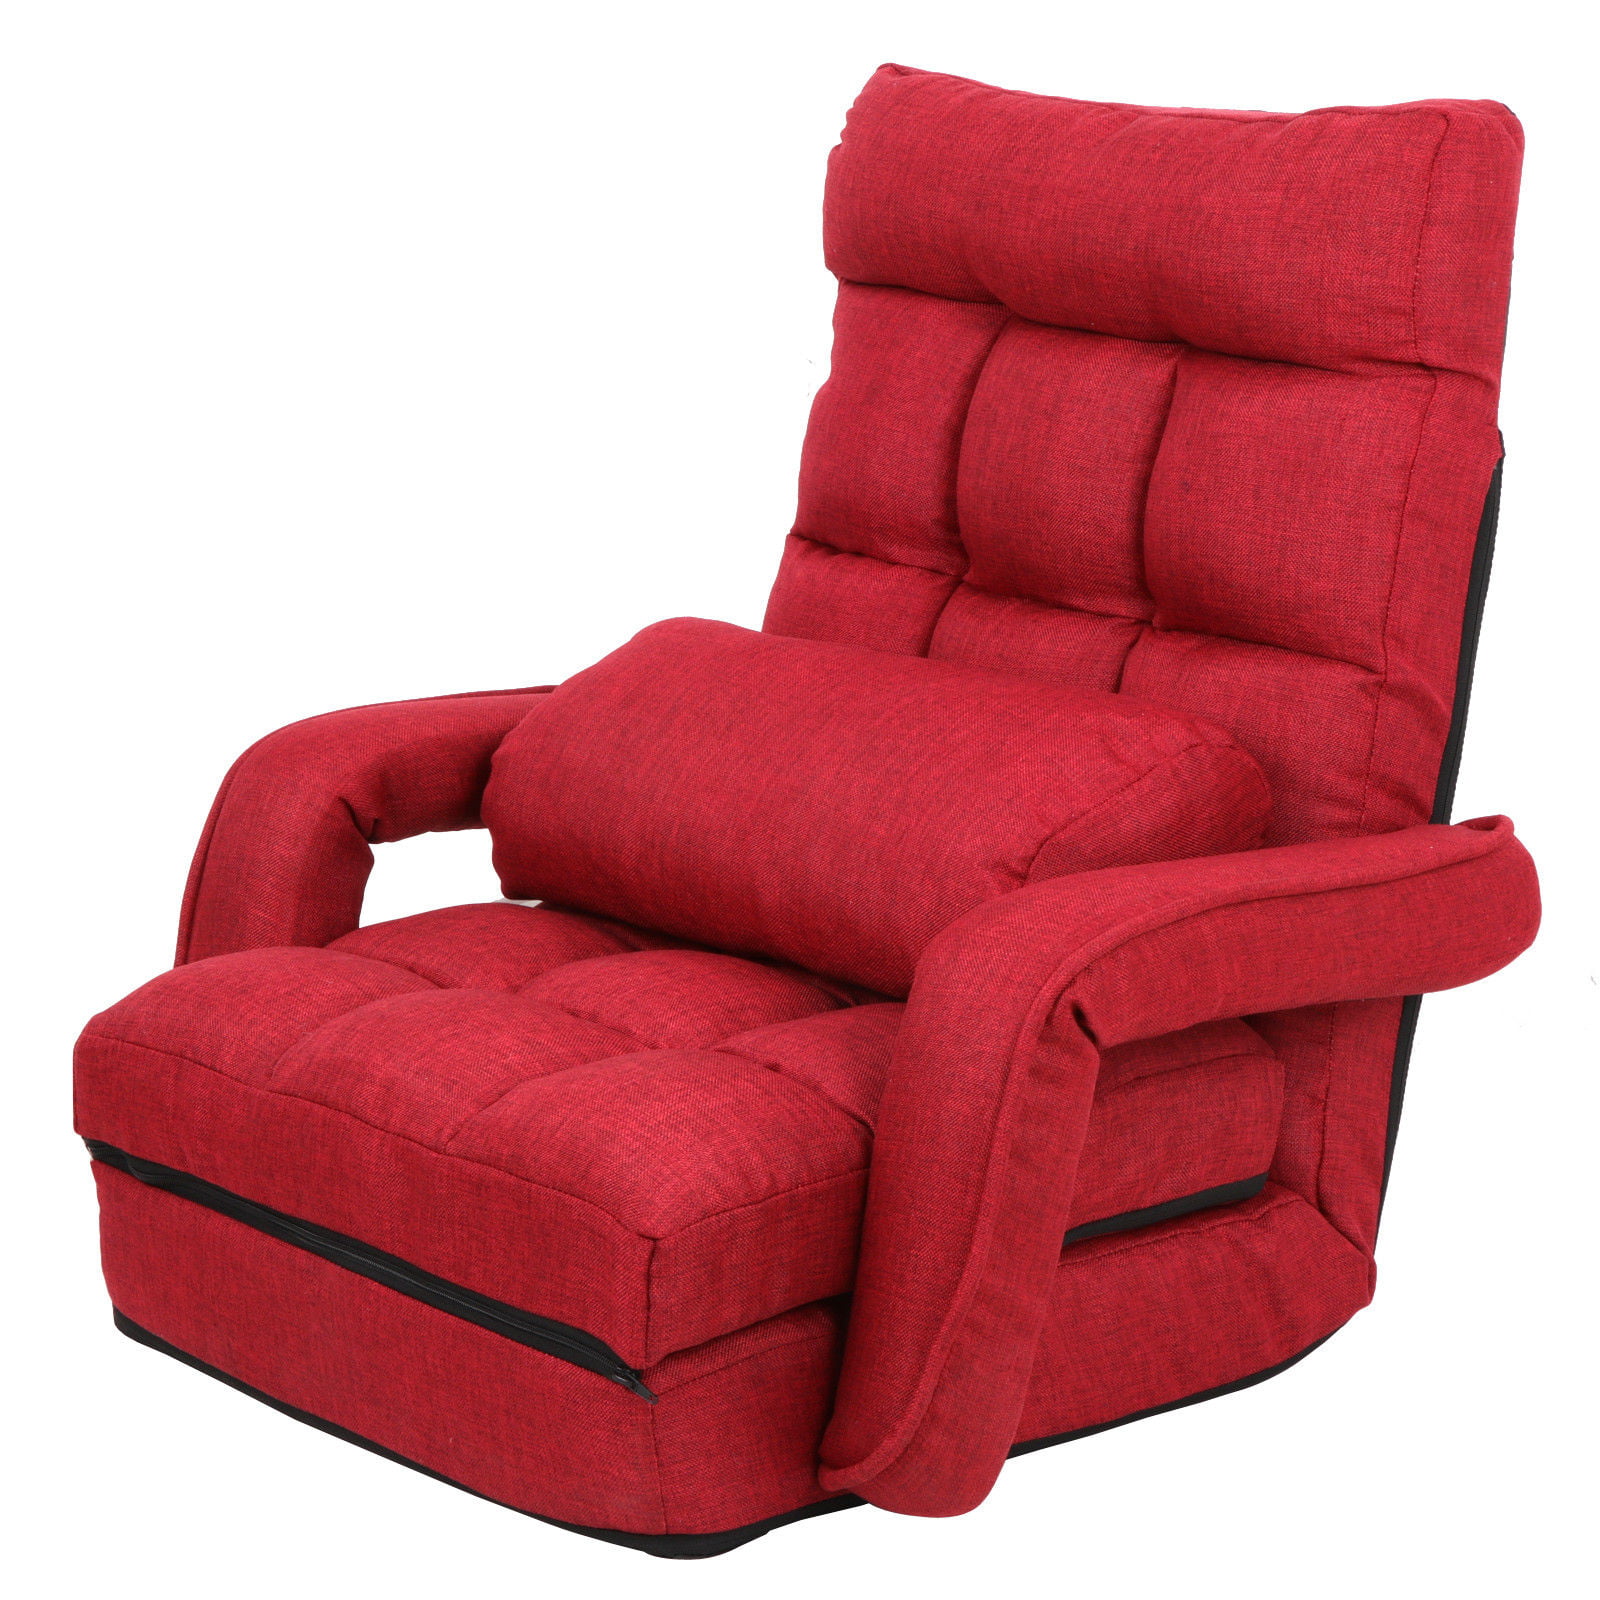 ZENY Adjustable 5-Position Folding Floor Chair Lazy Sofa Cushion Gaming